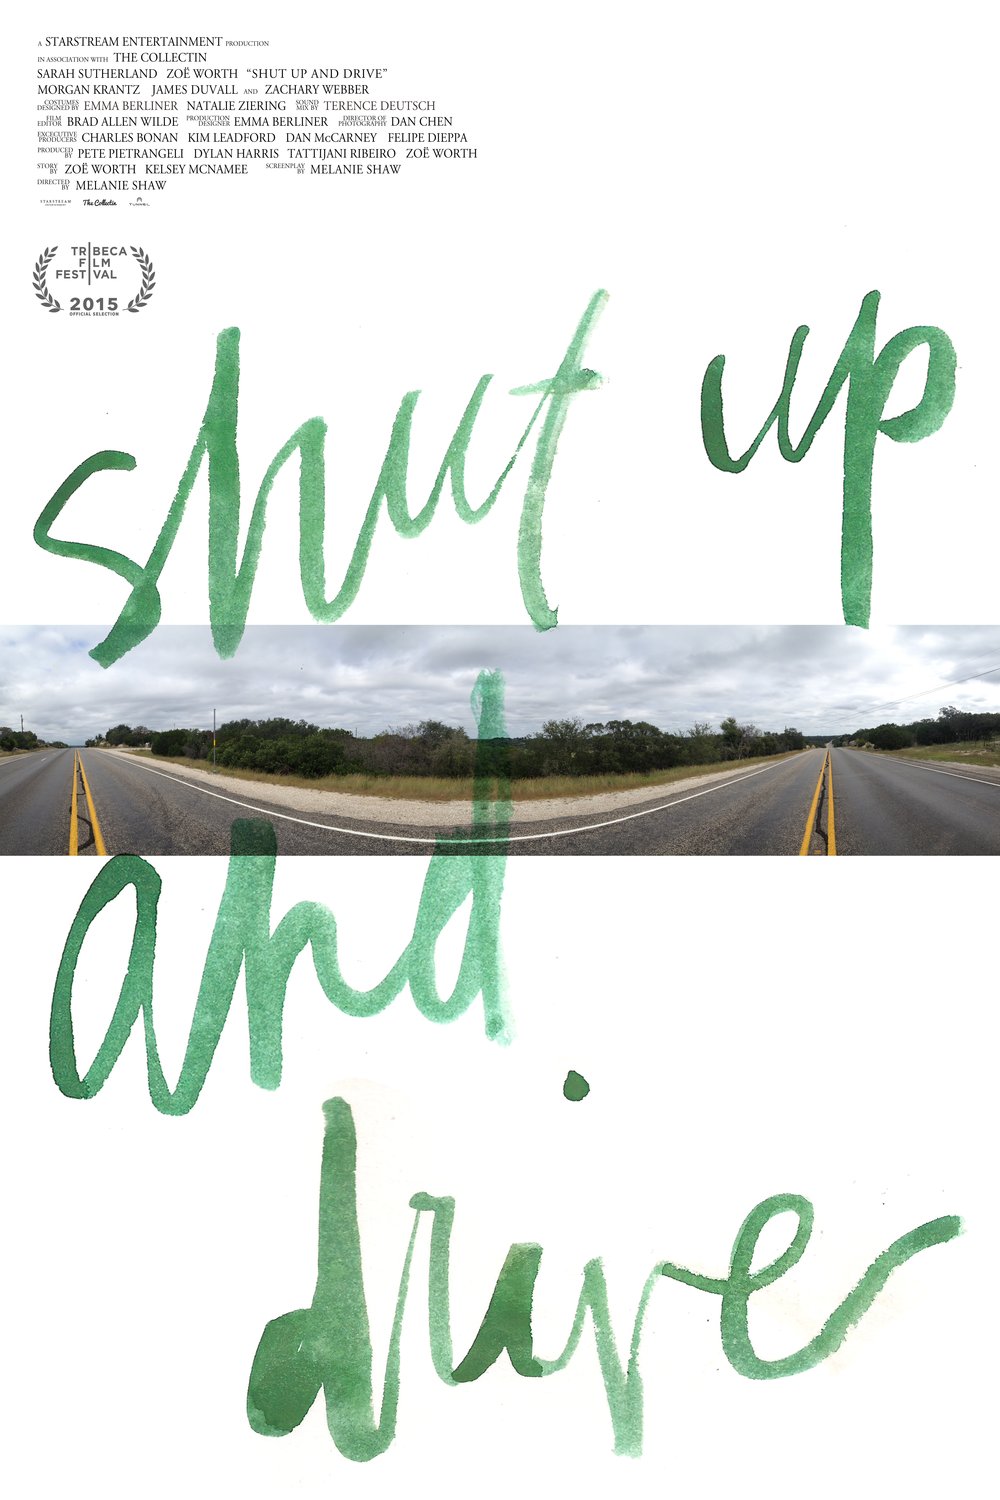 L'affiche du film Shut Up and Drive